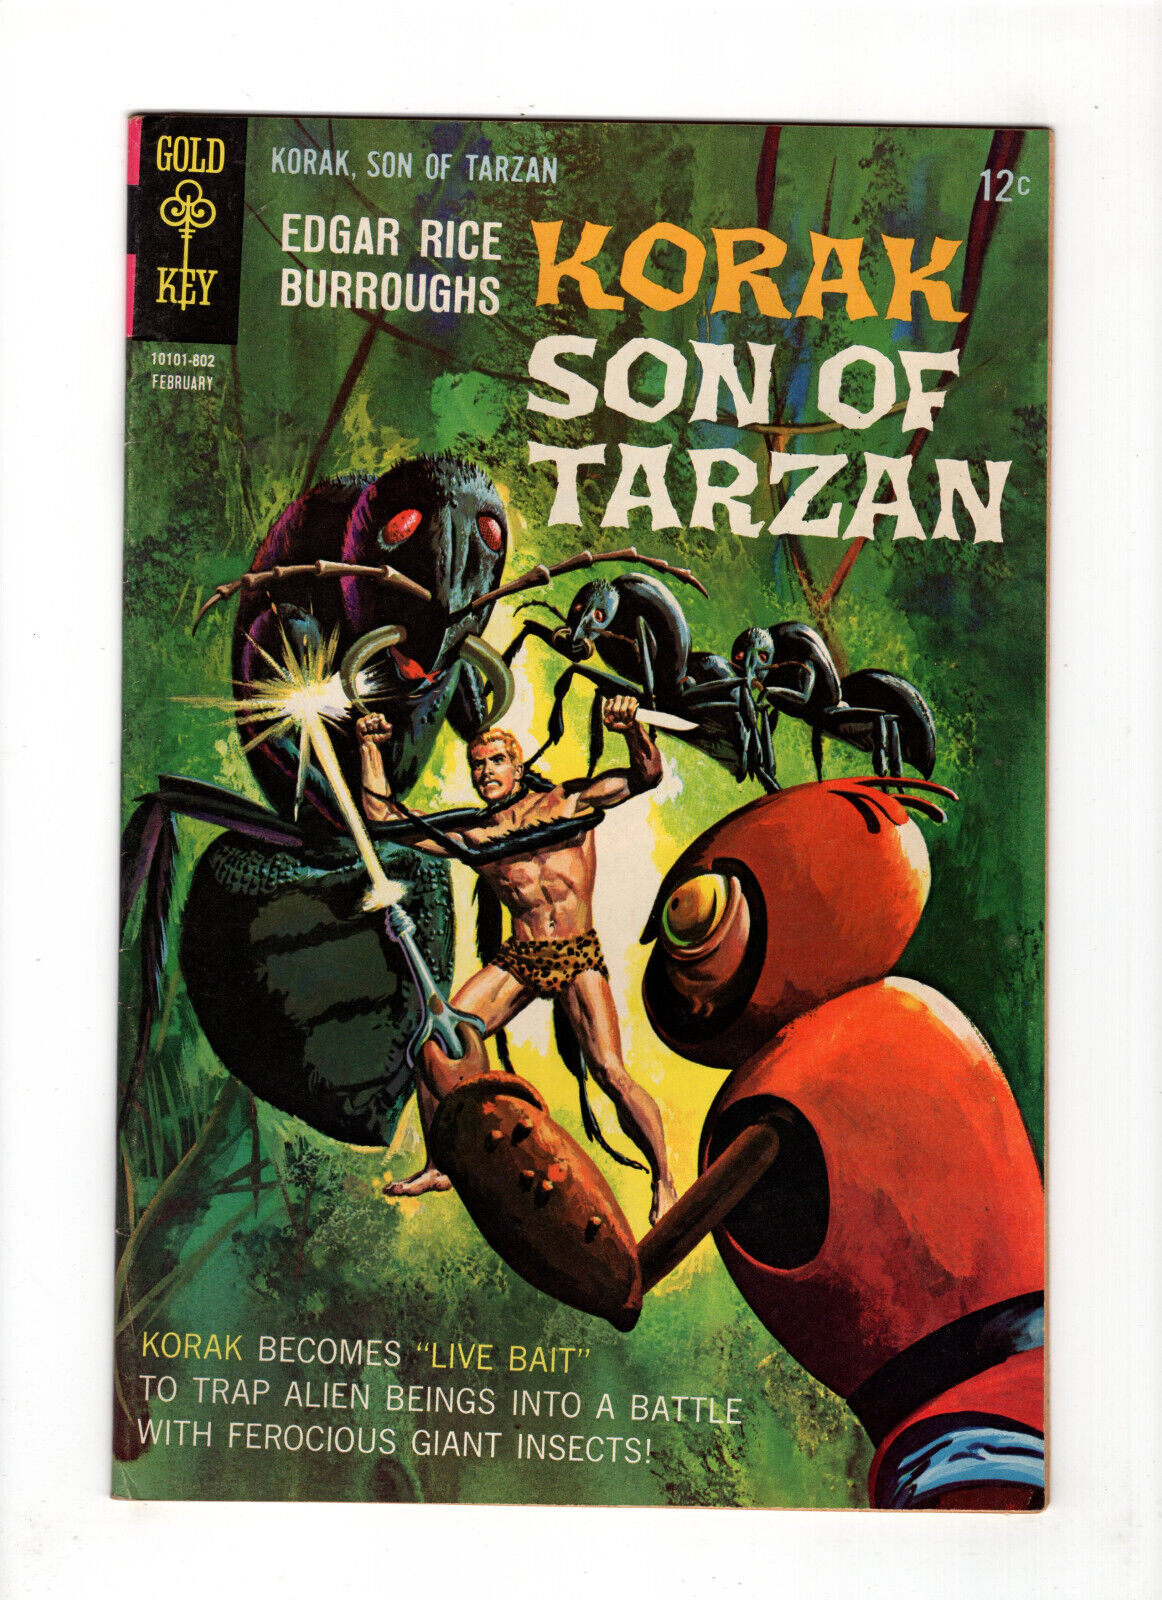 Edgar Rice Burroughs: Korak Son of Tarzan #21 (1968, Gold Key Comics)